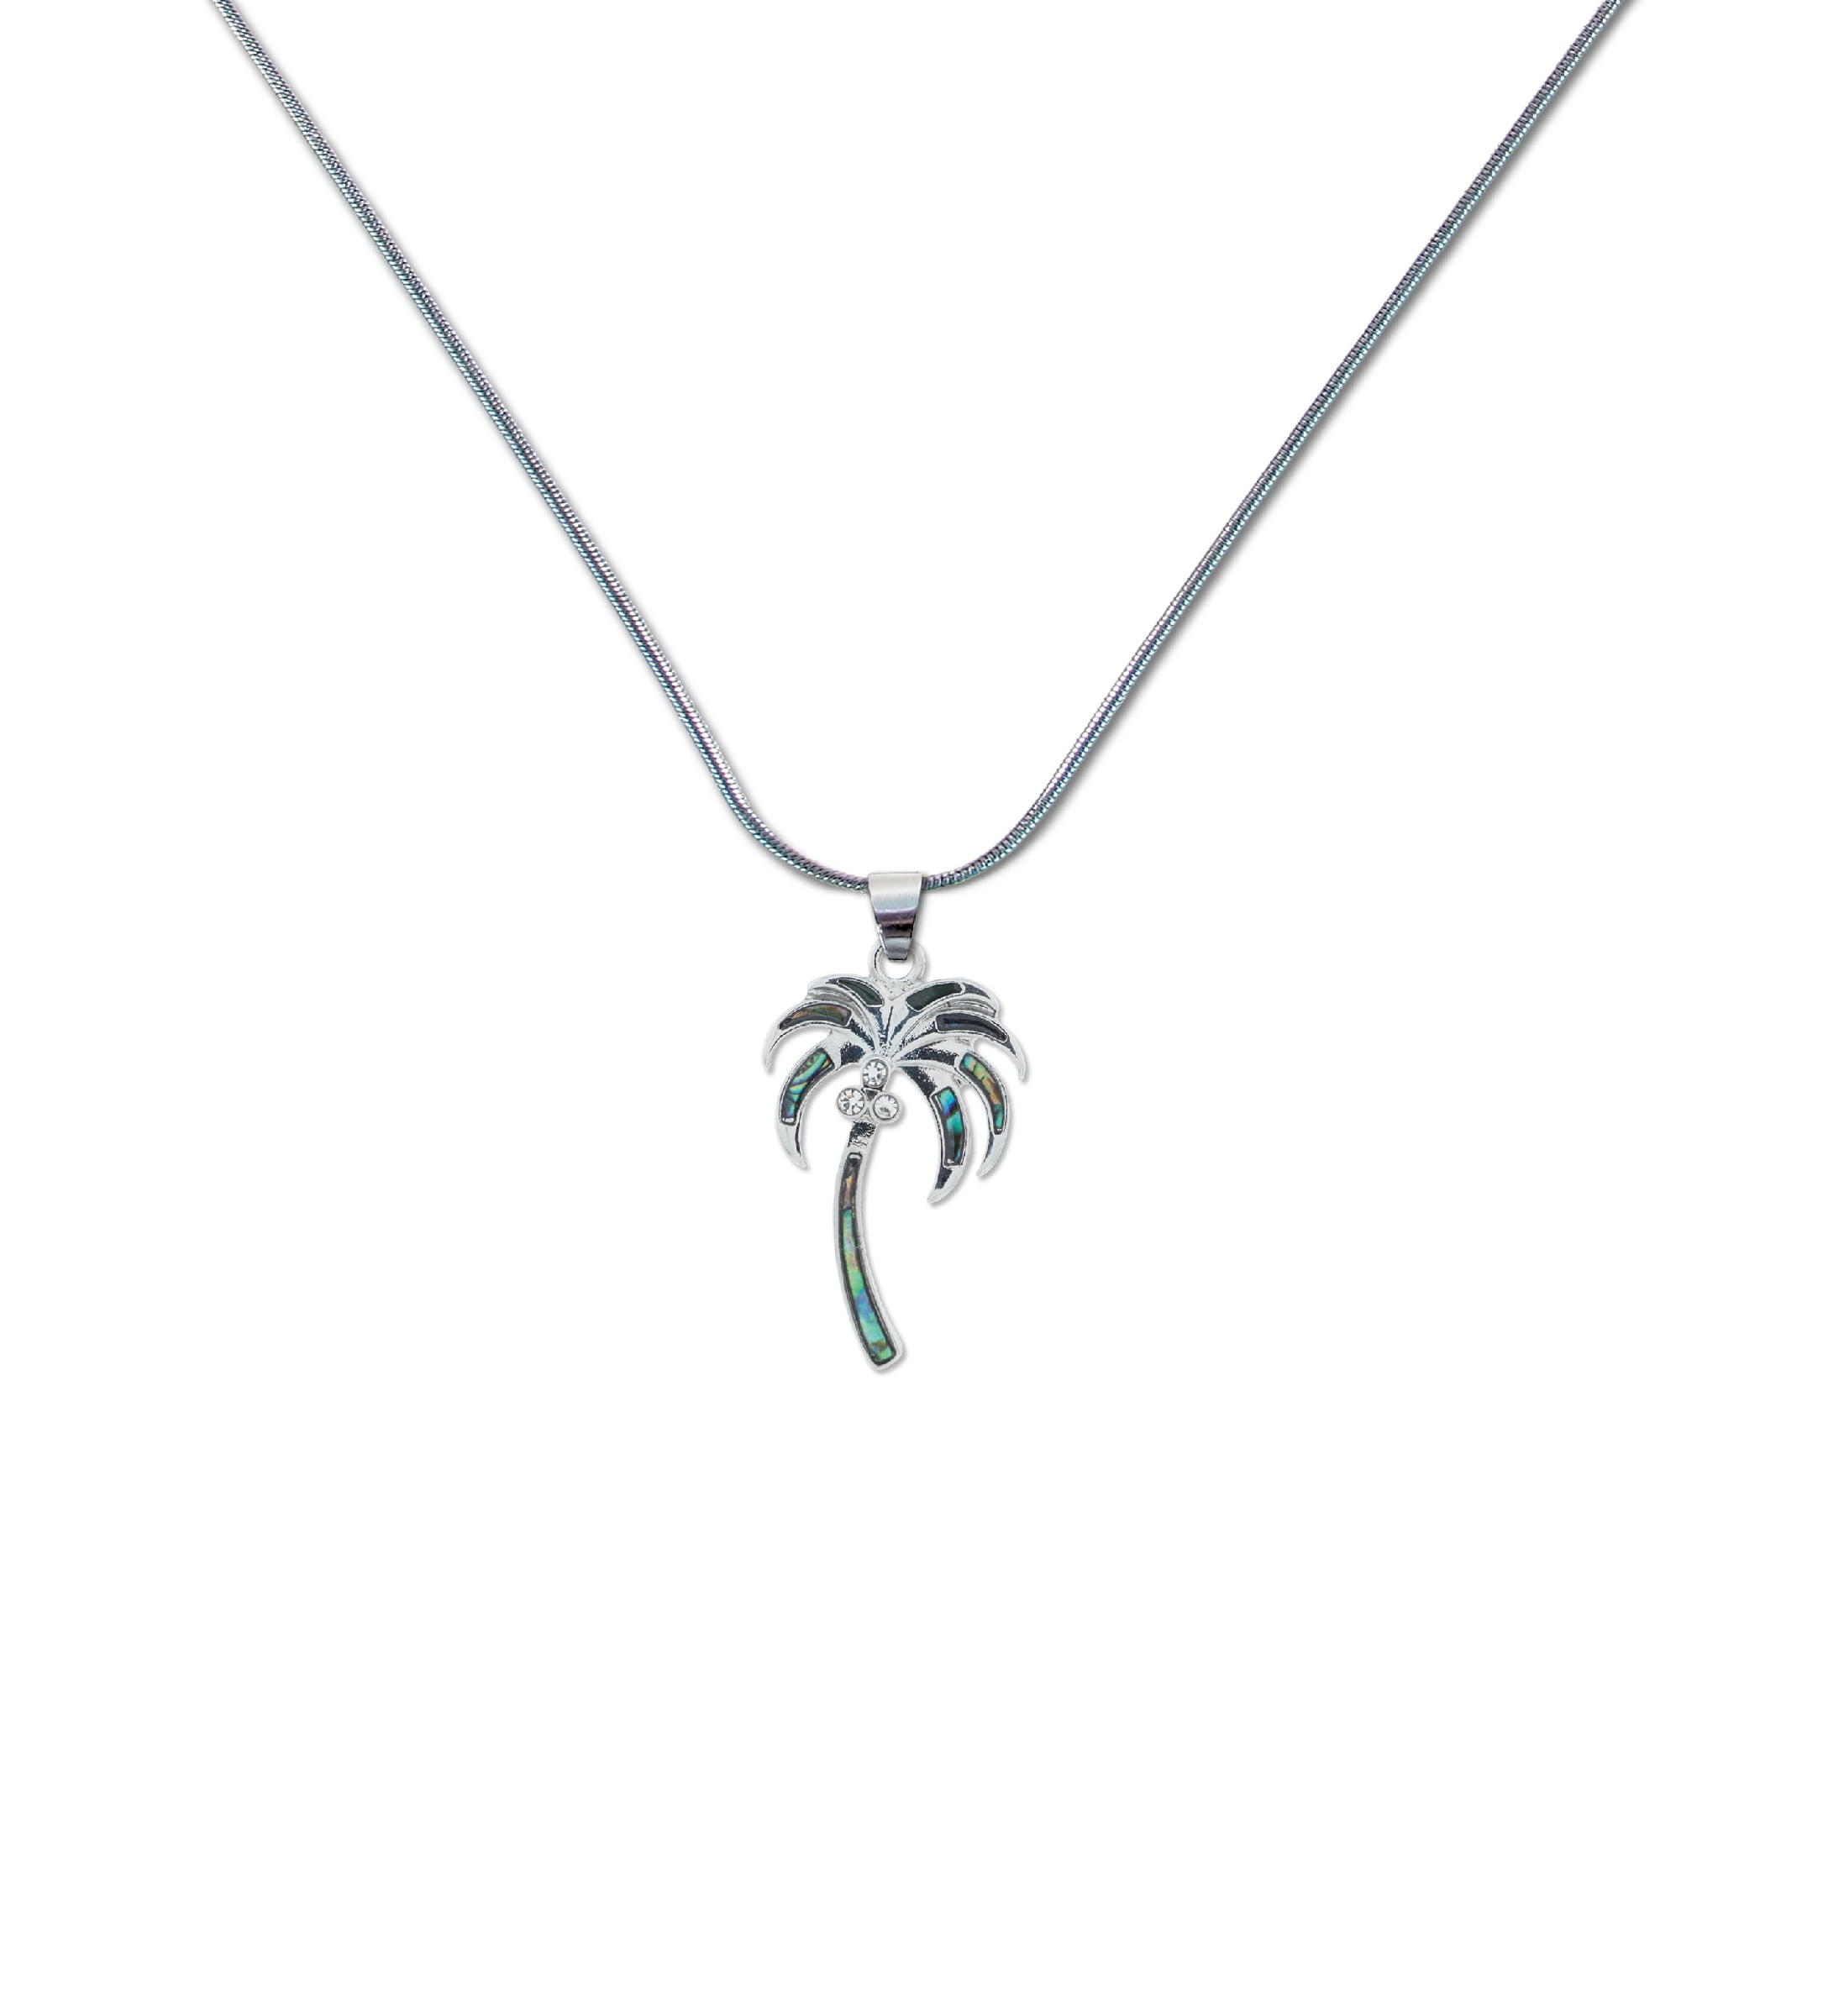 Butterfly Necklace Blue Paua Abalone Shell Pendant Silver Fashion Jewellery 18" 